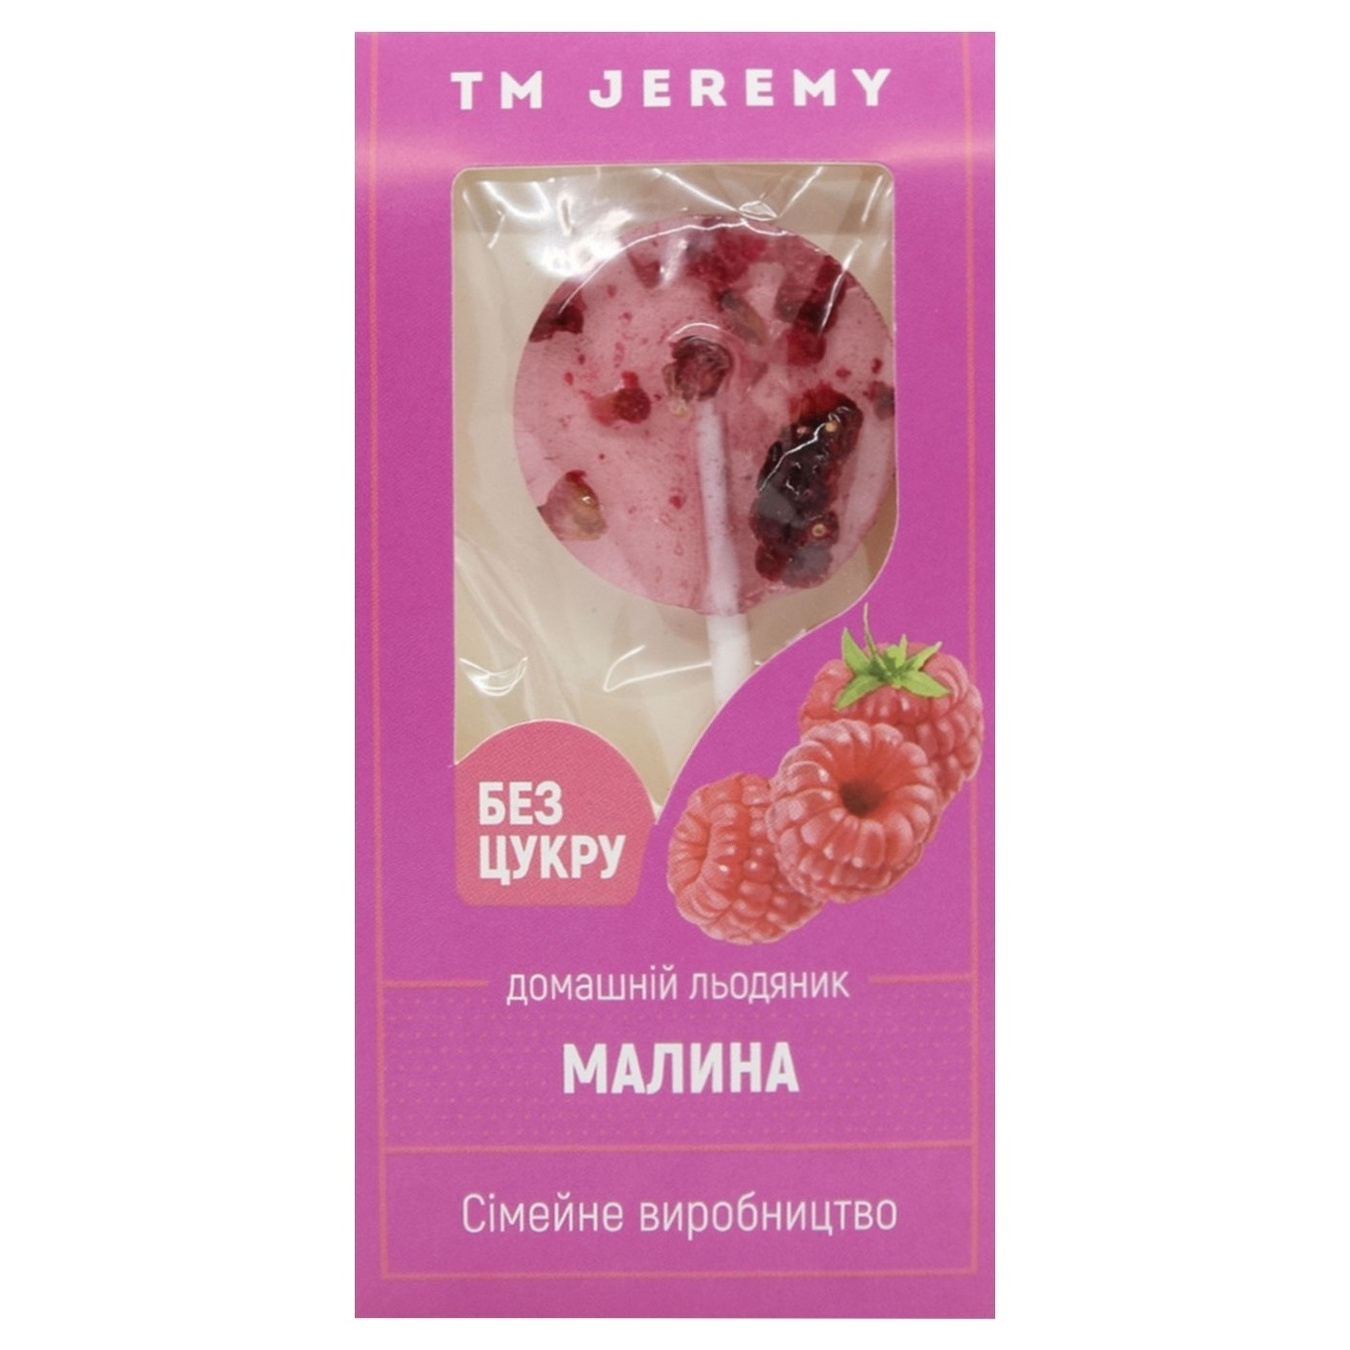 Lollipop Jeremy Raspberry without sugar 10g